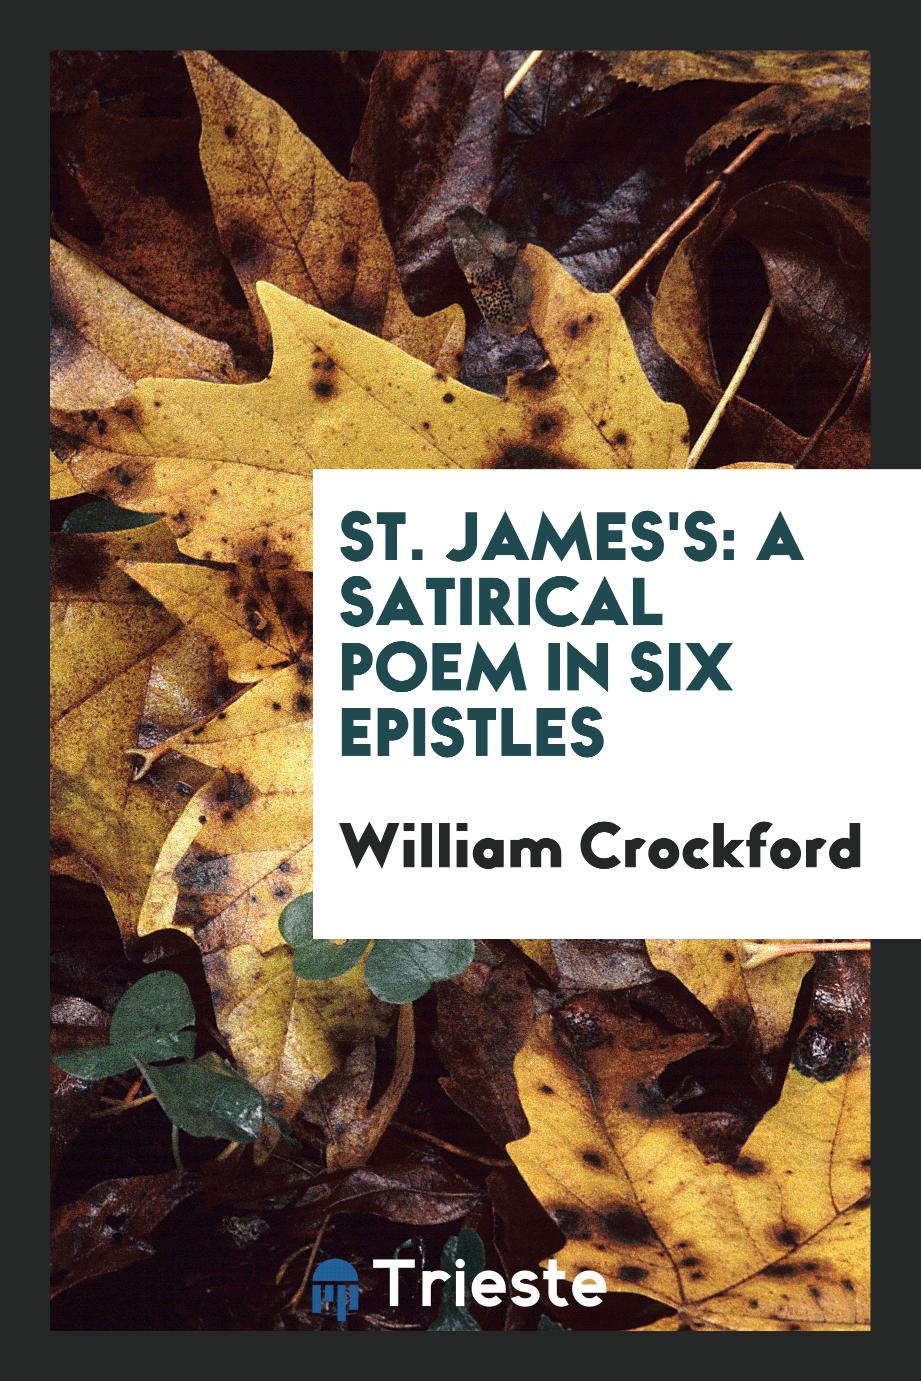 St. James's: A Satirical Poem in Six Epistles